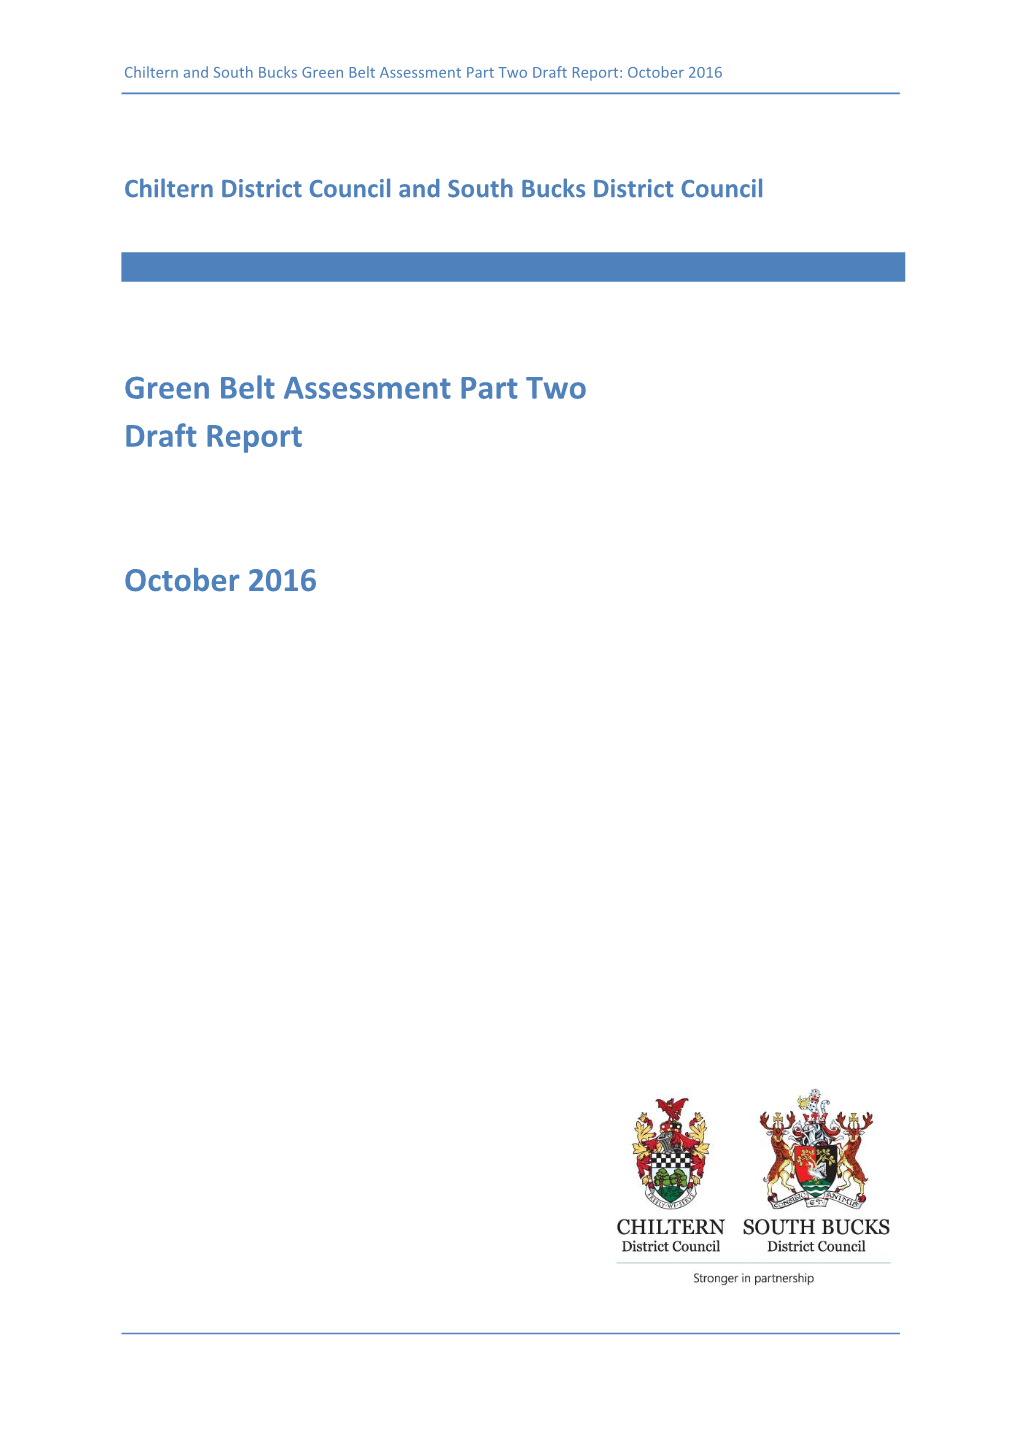 Green Belt Assessment Part Two Draft Report October 2016